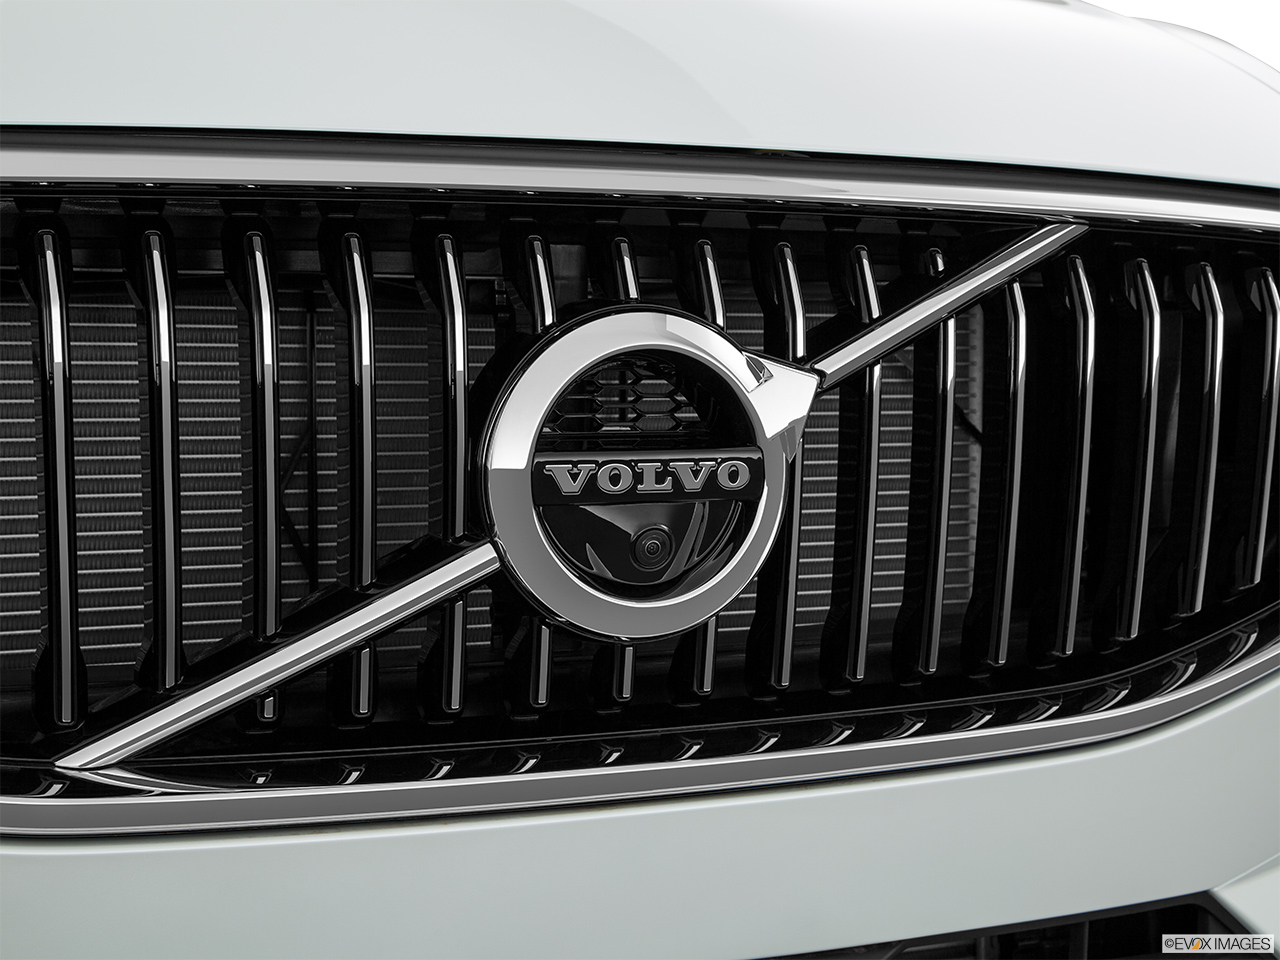 2019 Volvo XC60 T8 Inscription eAWD Plug-in Hybrid Rear manufacture badge/emblem 